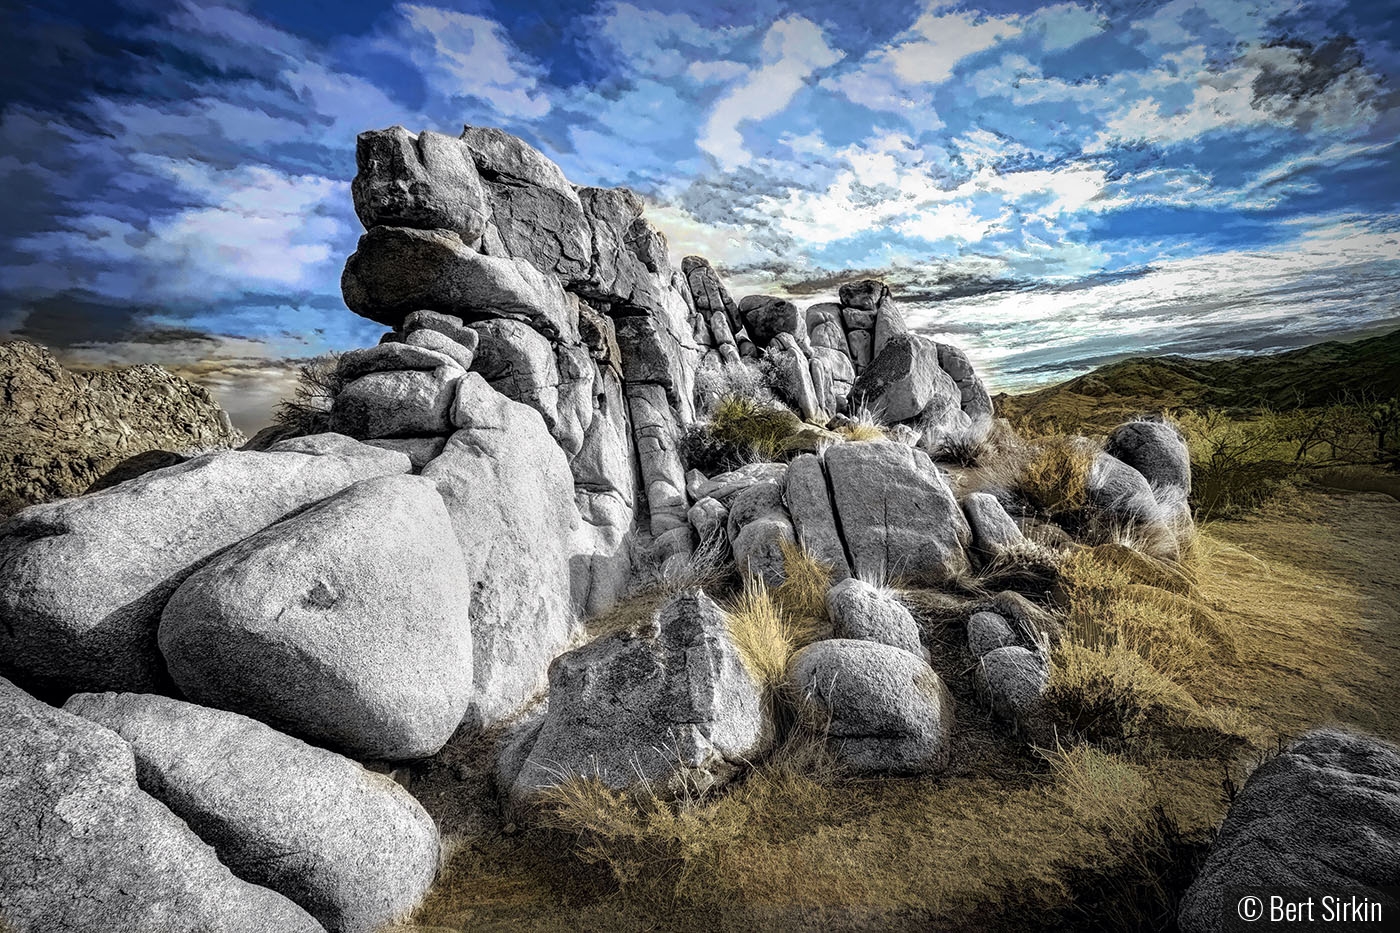 Joshua Tree Rocks by Bert Sirkin